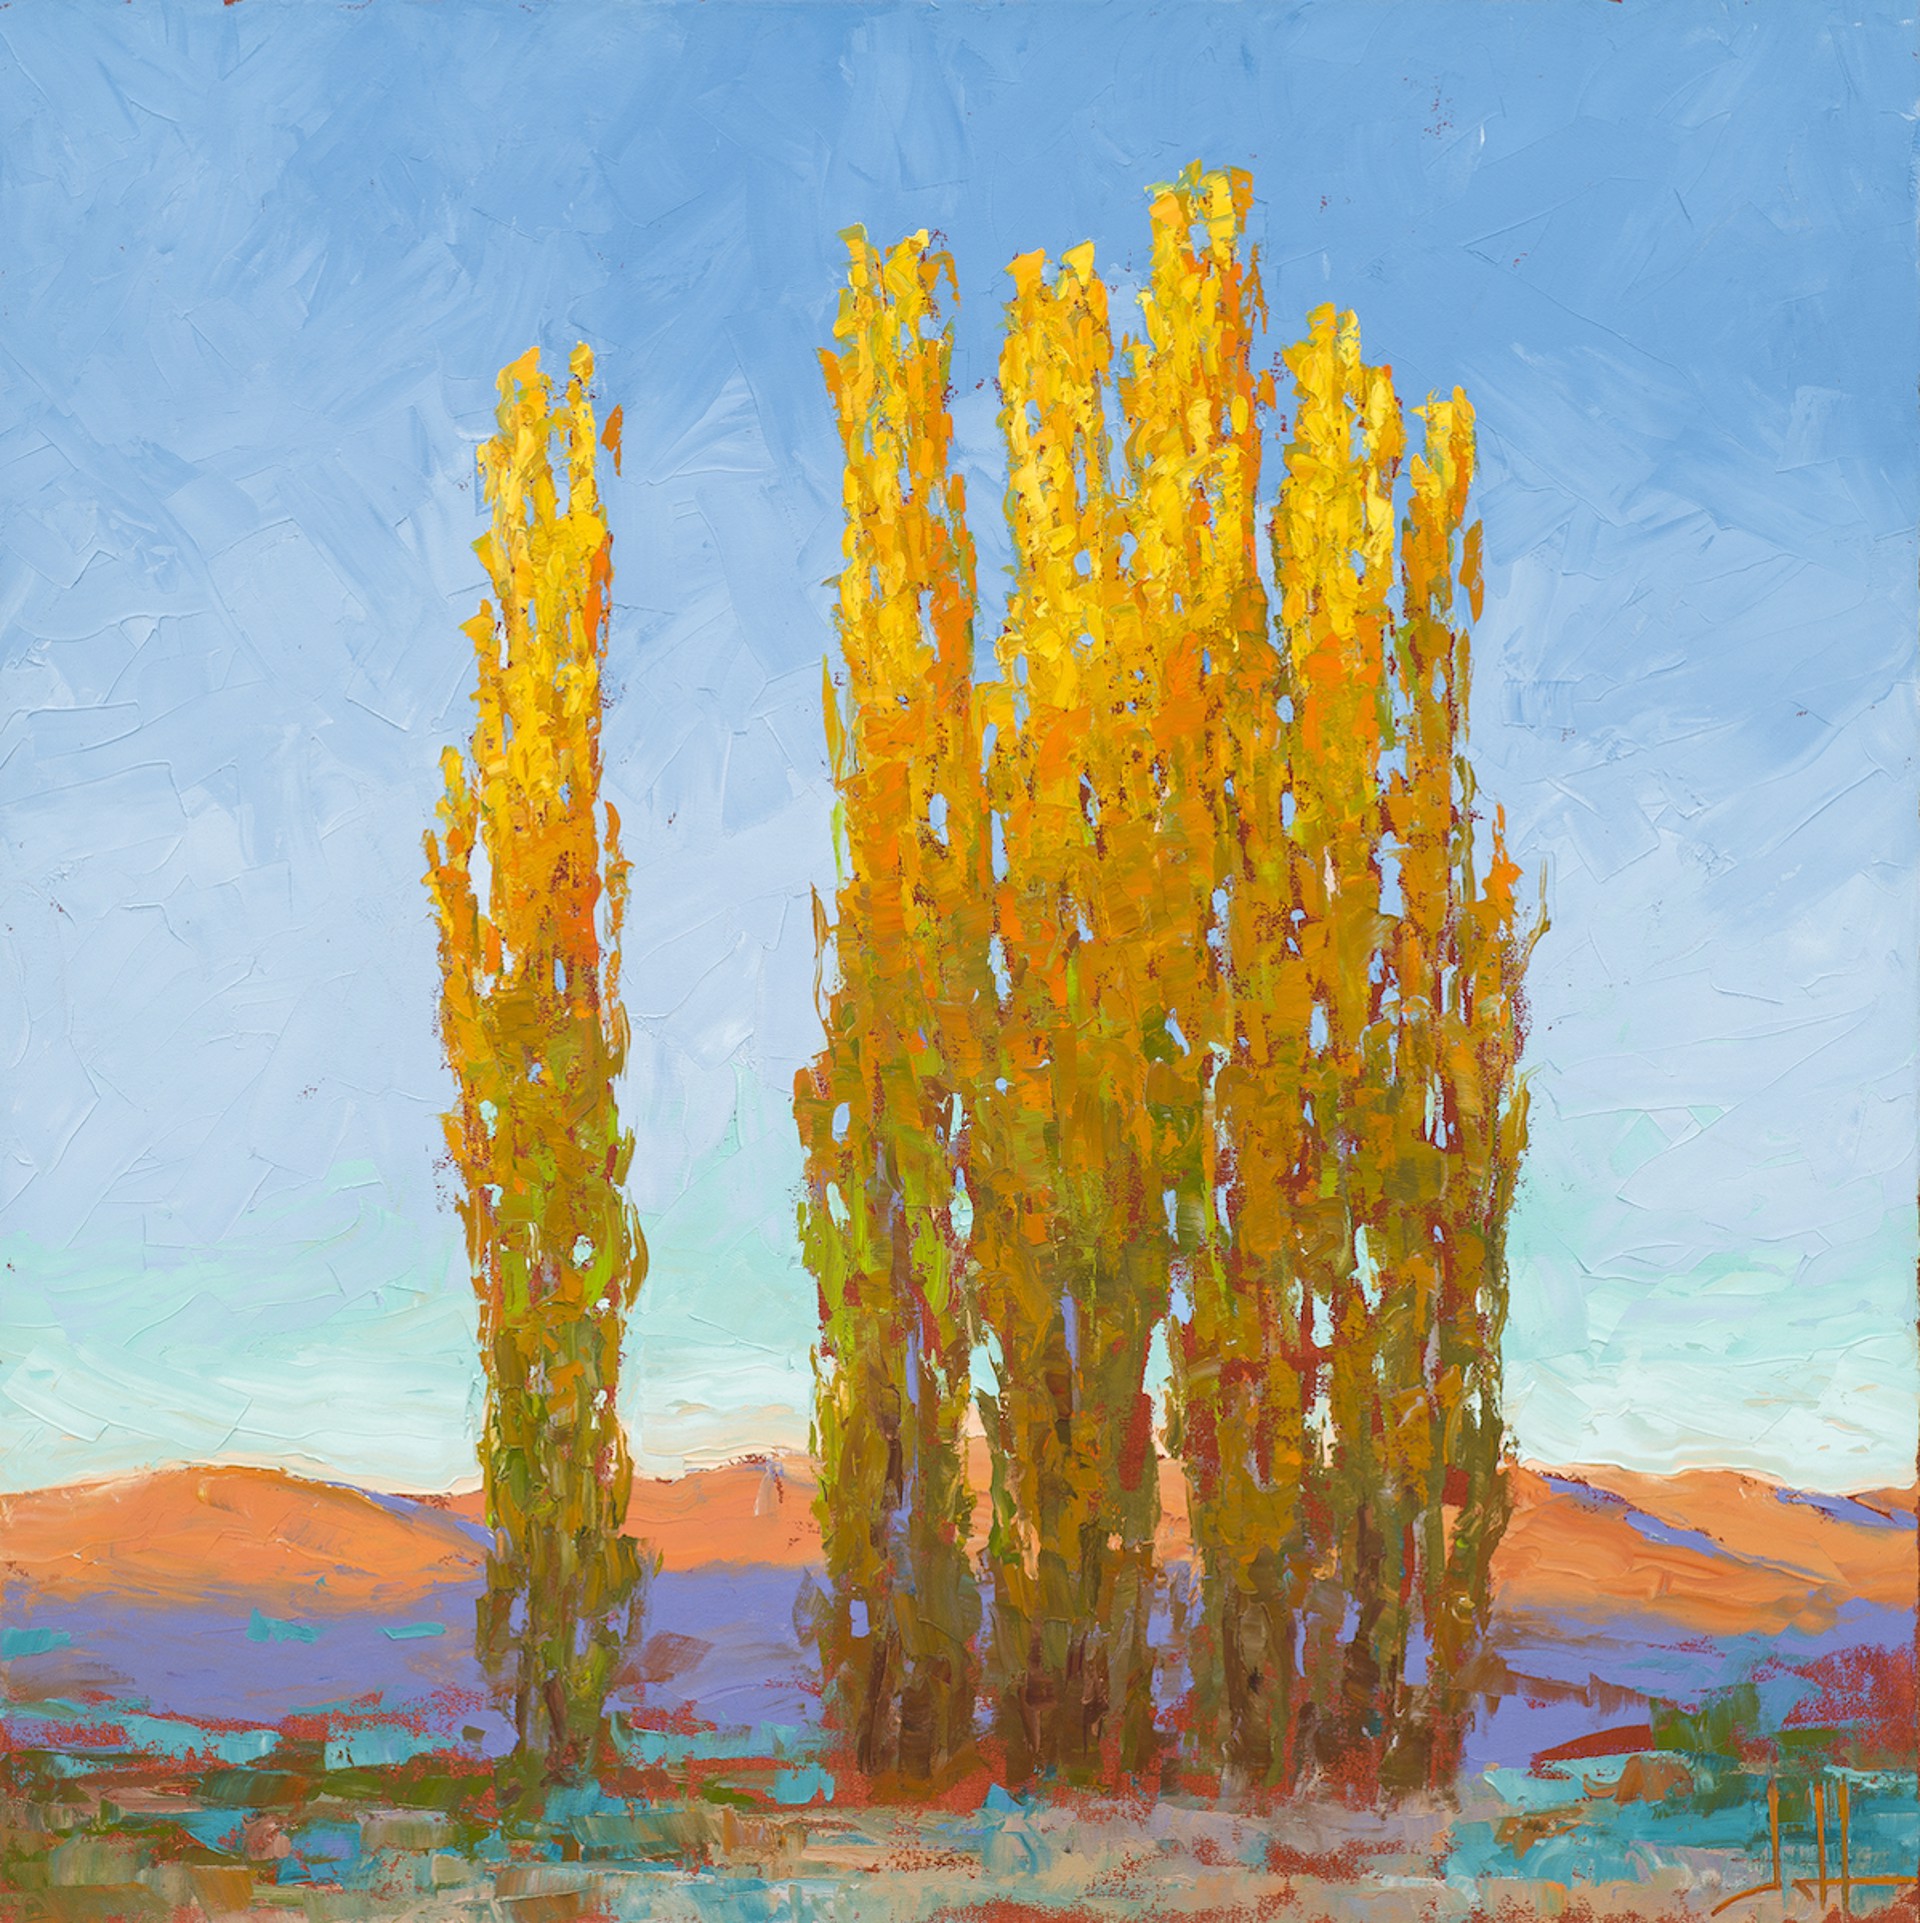 Morning Poplars by Jeff Daniel Smith